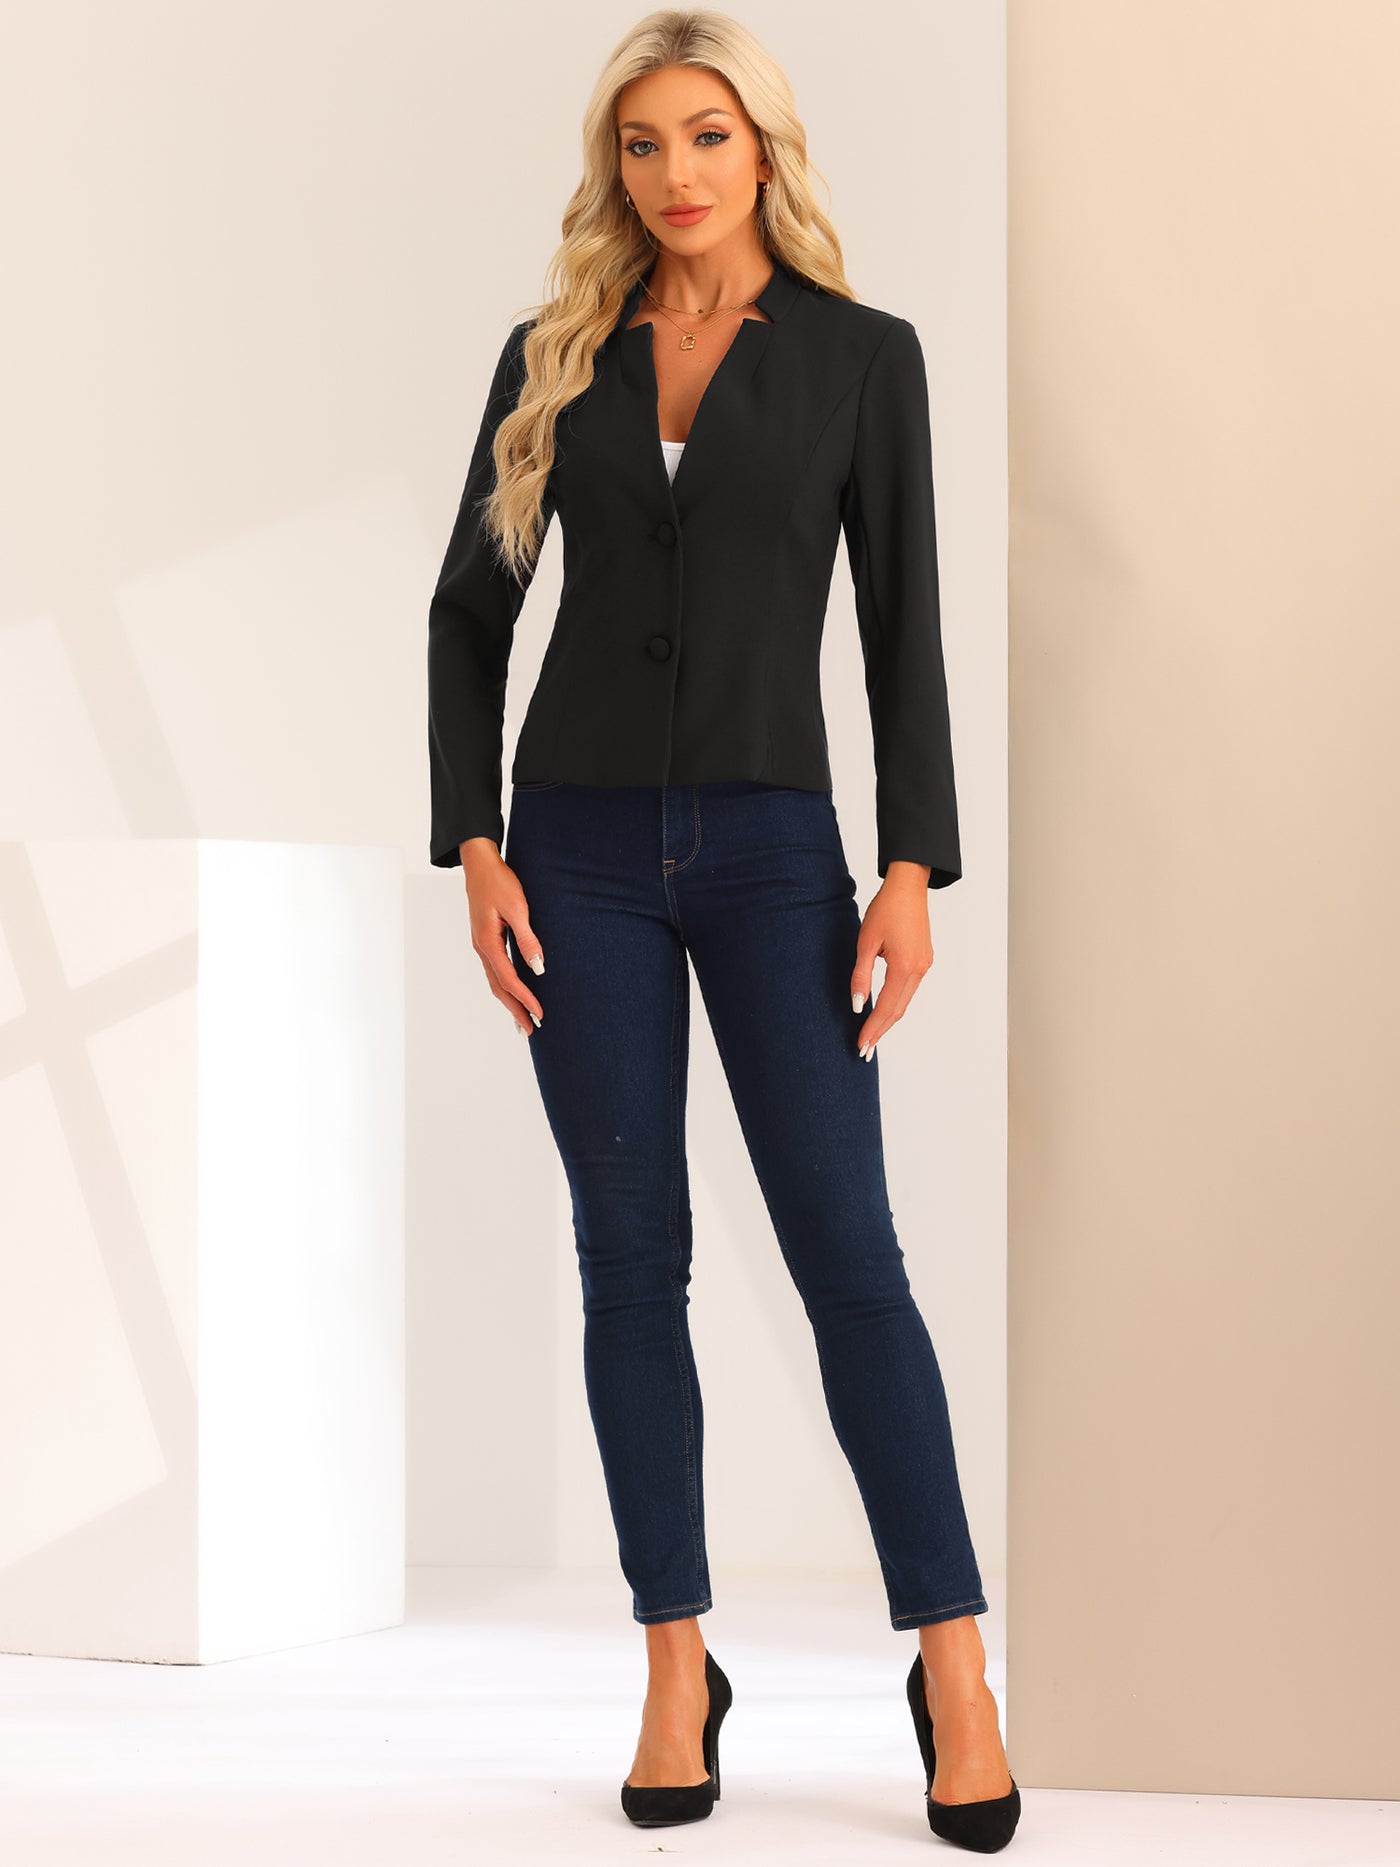 Allegra K Elegant Blazer Long Sleeve Button Front Stretch Office Suit Jacket